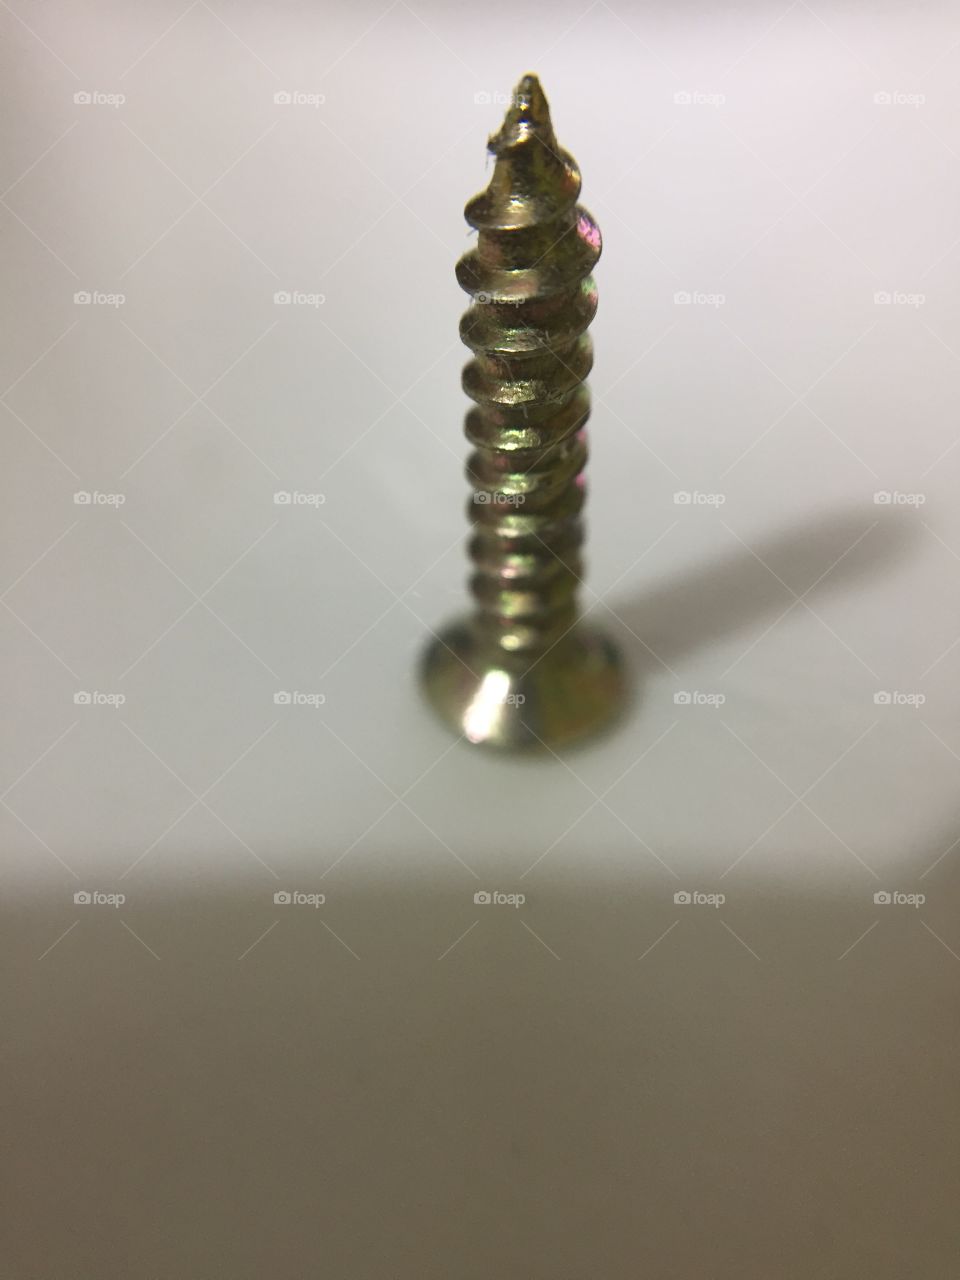 Little gold screw